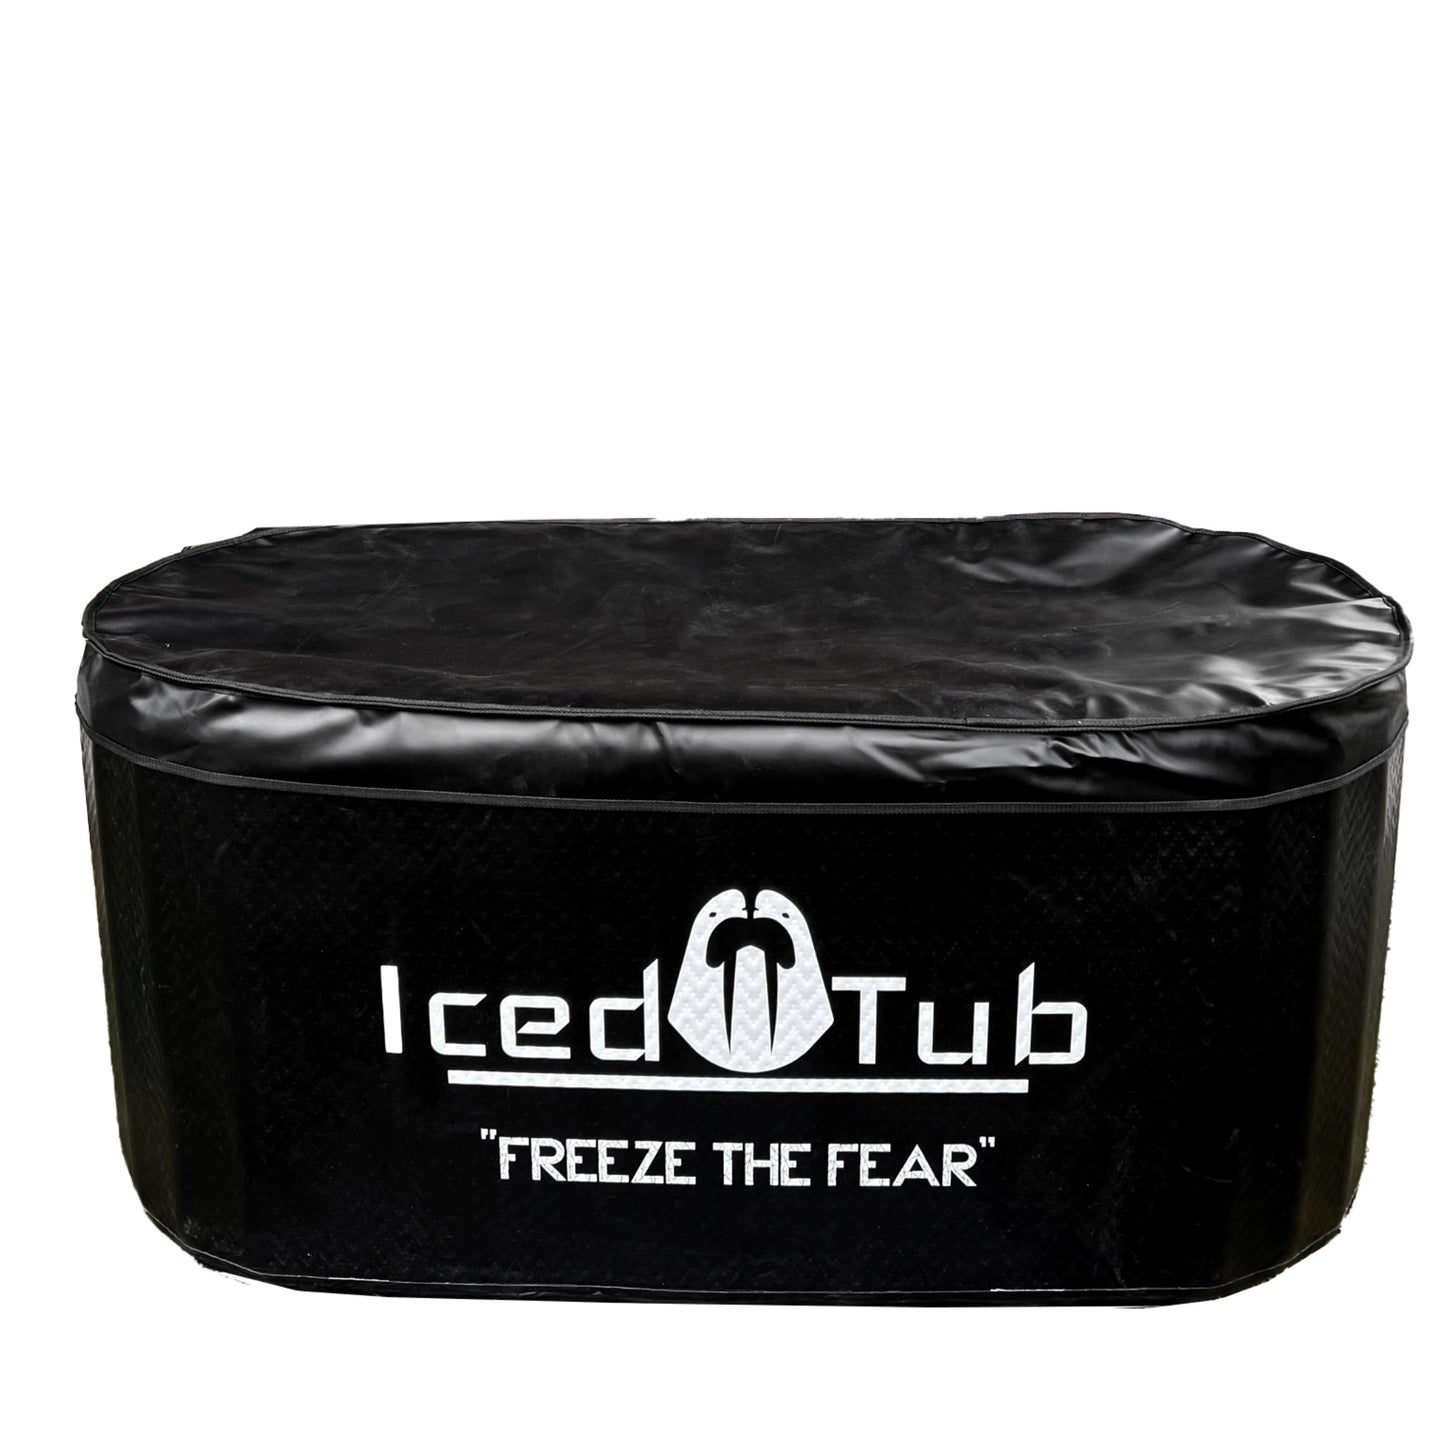 iCedRider 2-Person Portable Ice Bath